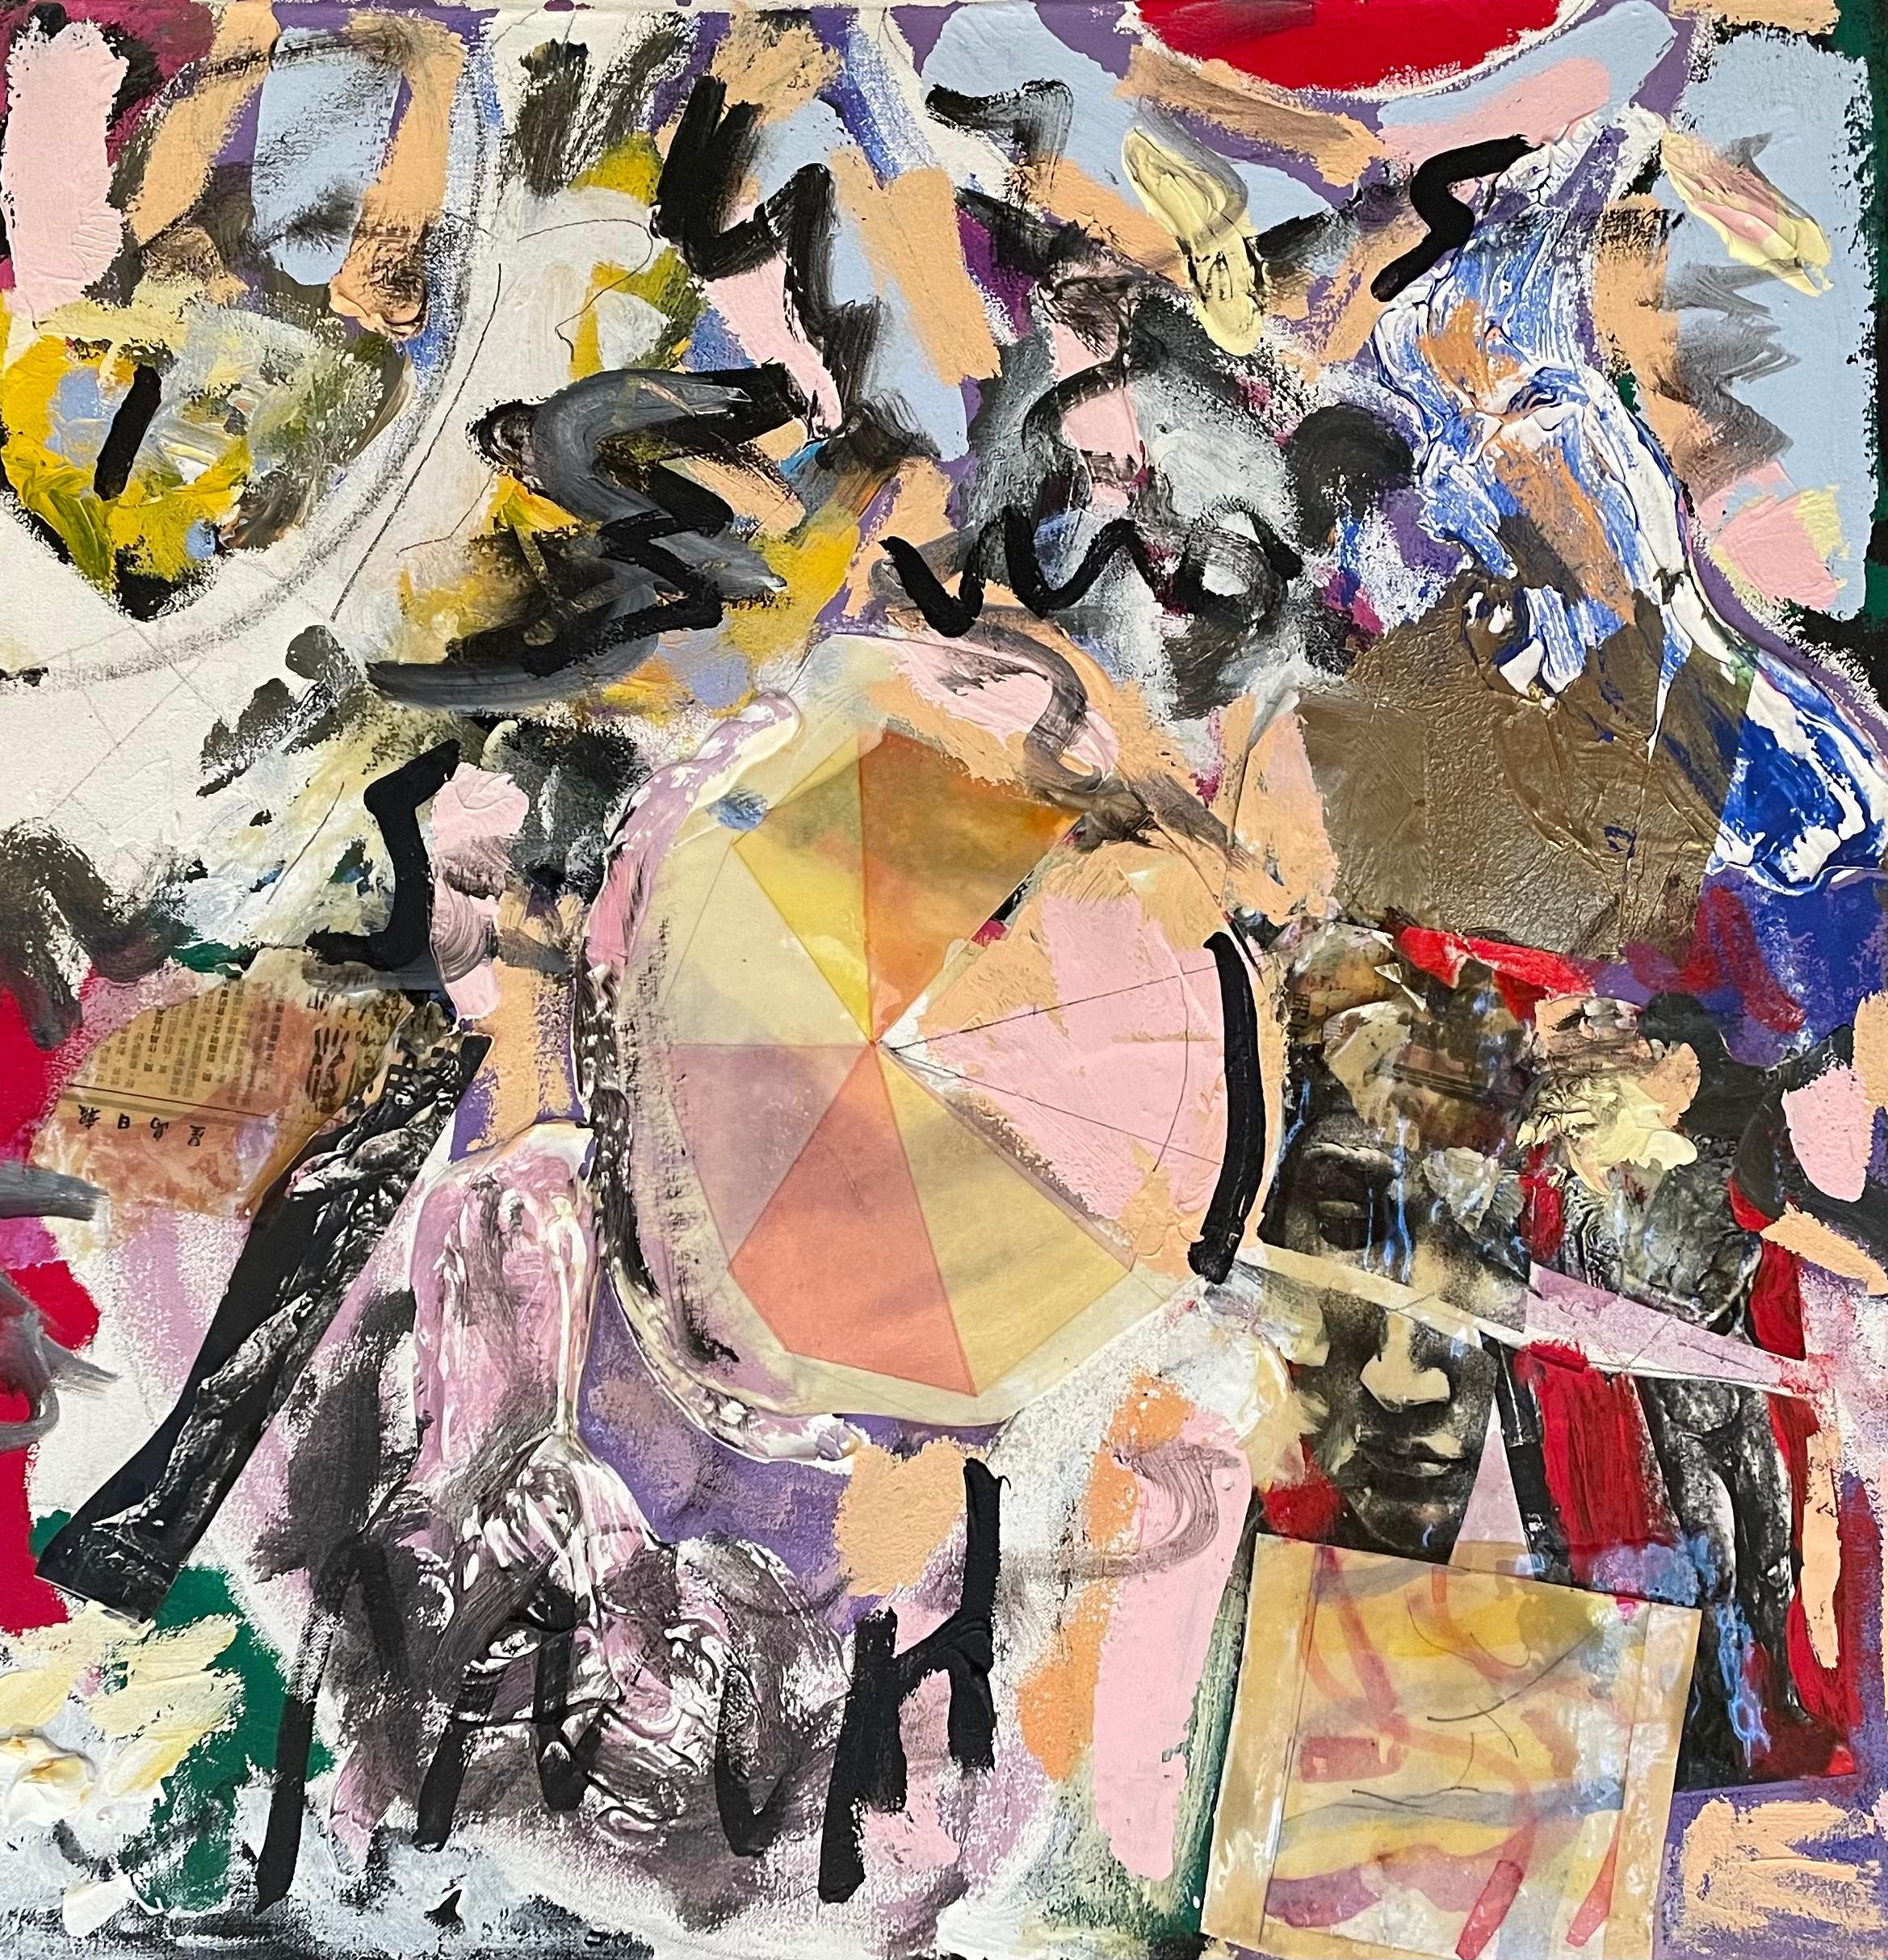 "Ser libre" Abstracto contemporáneo en técnica mixta de colores de Steven Rehfeld